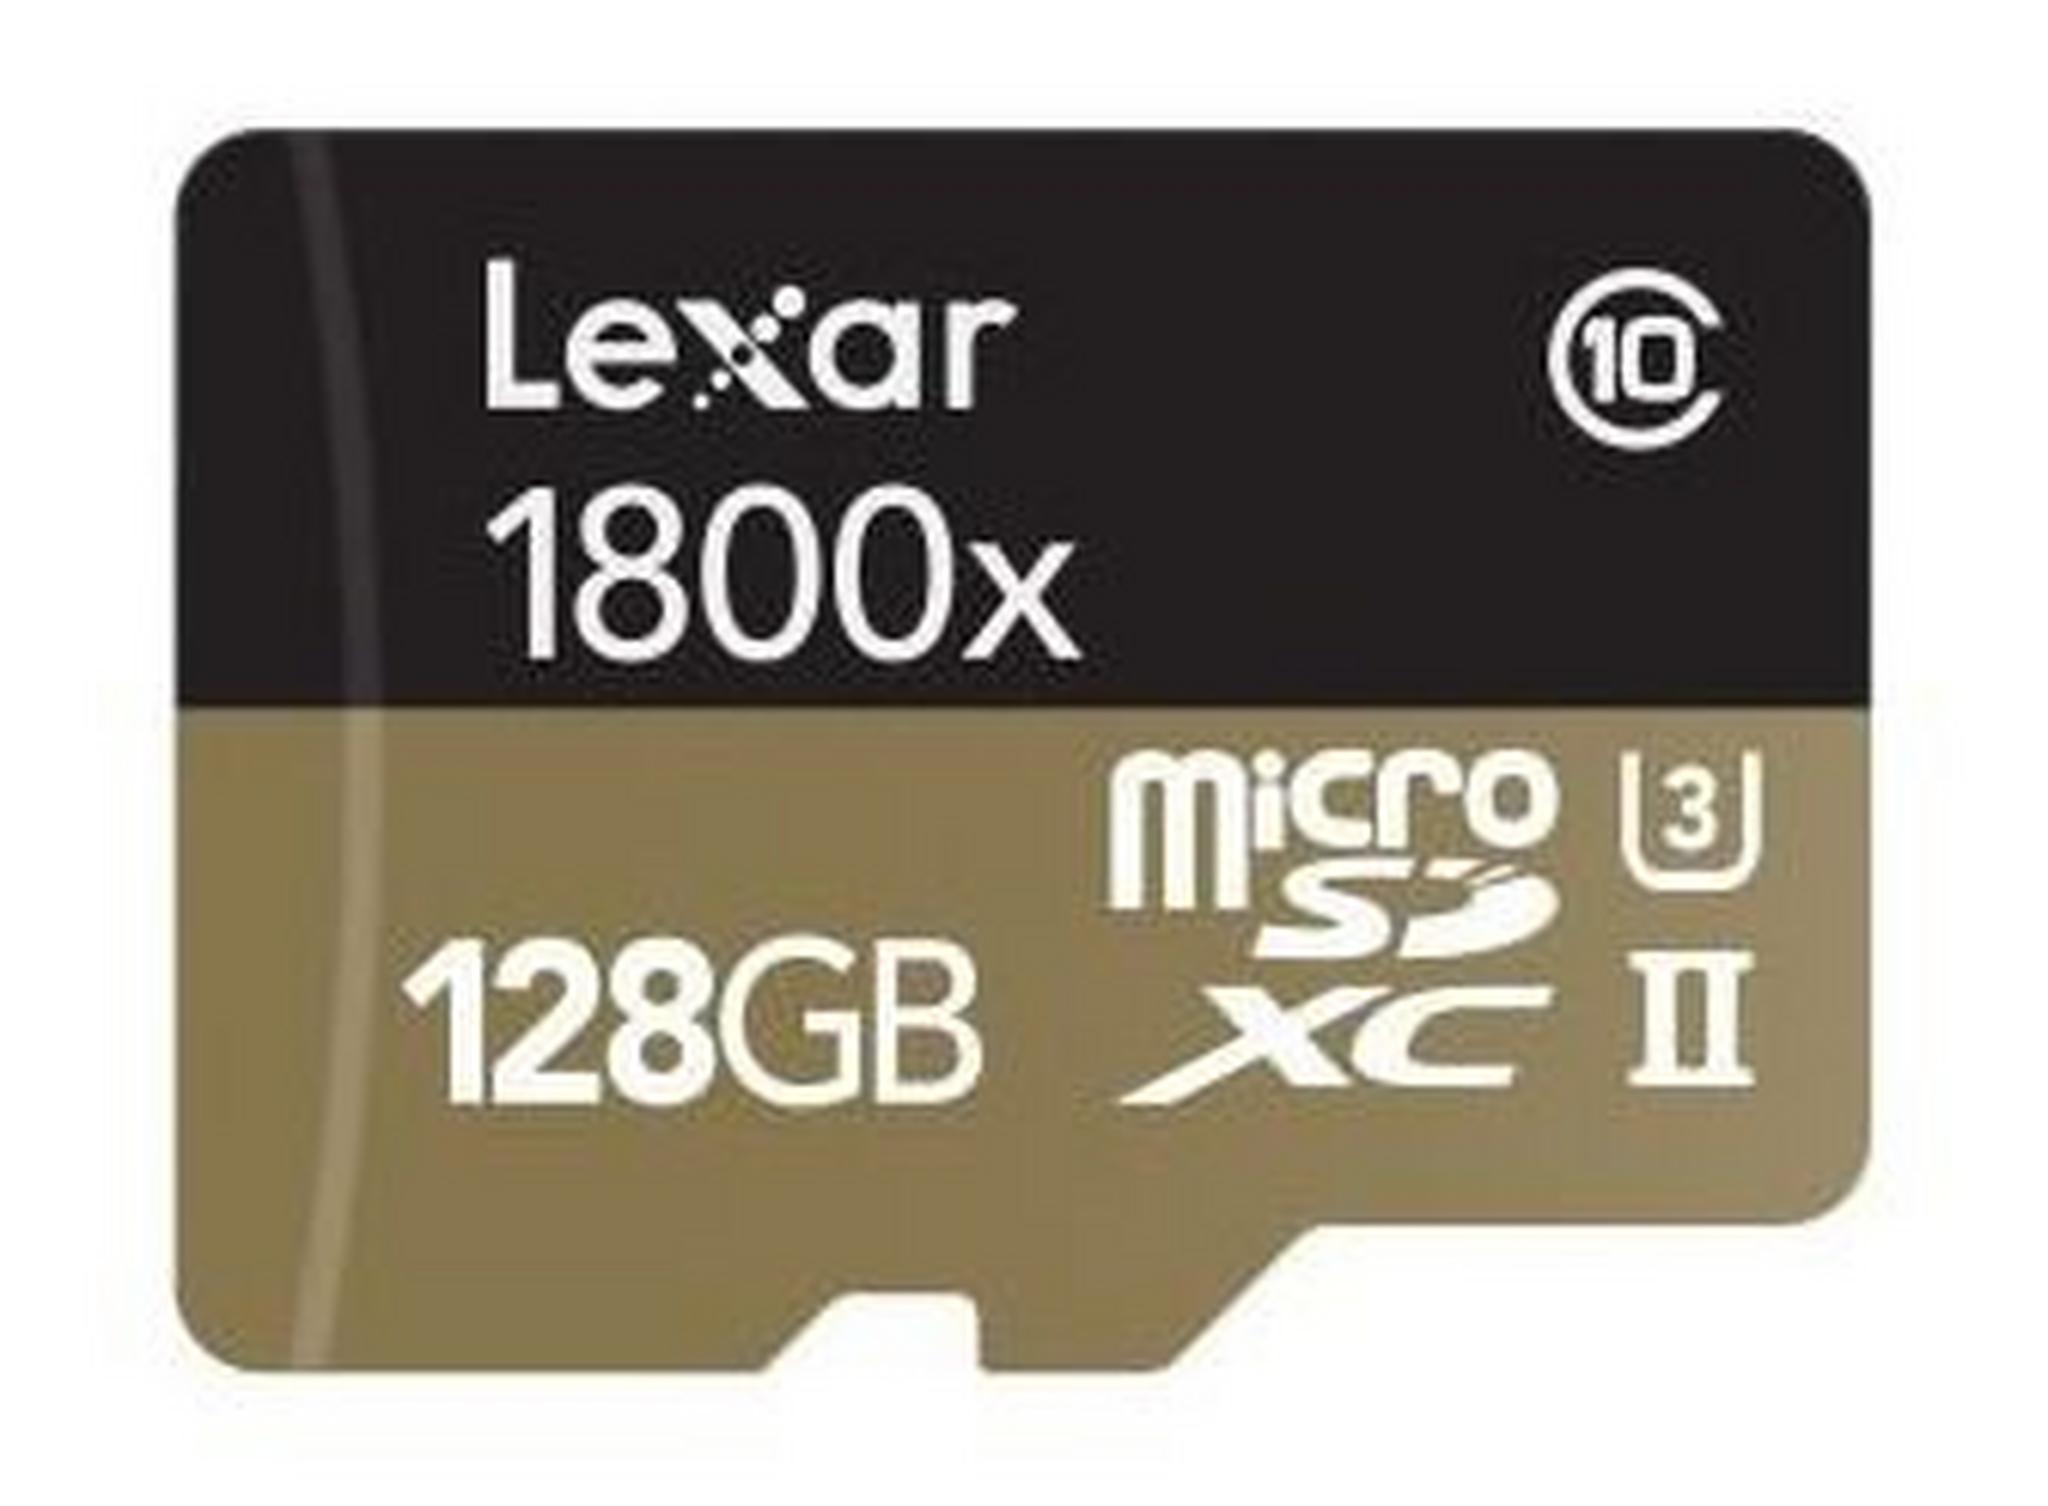 Lexar Professional 128GB 1800x MicroSDHC /MicroSDXC UHS-II Cards - (LSDMI128CRBNA1800R)